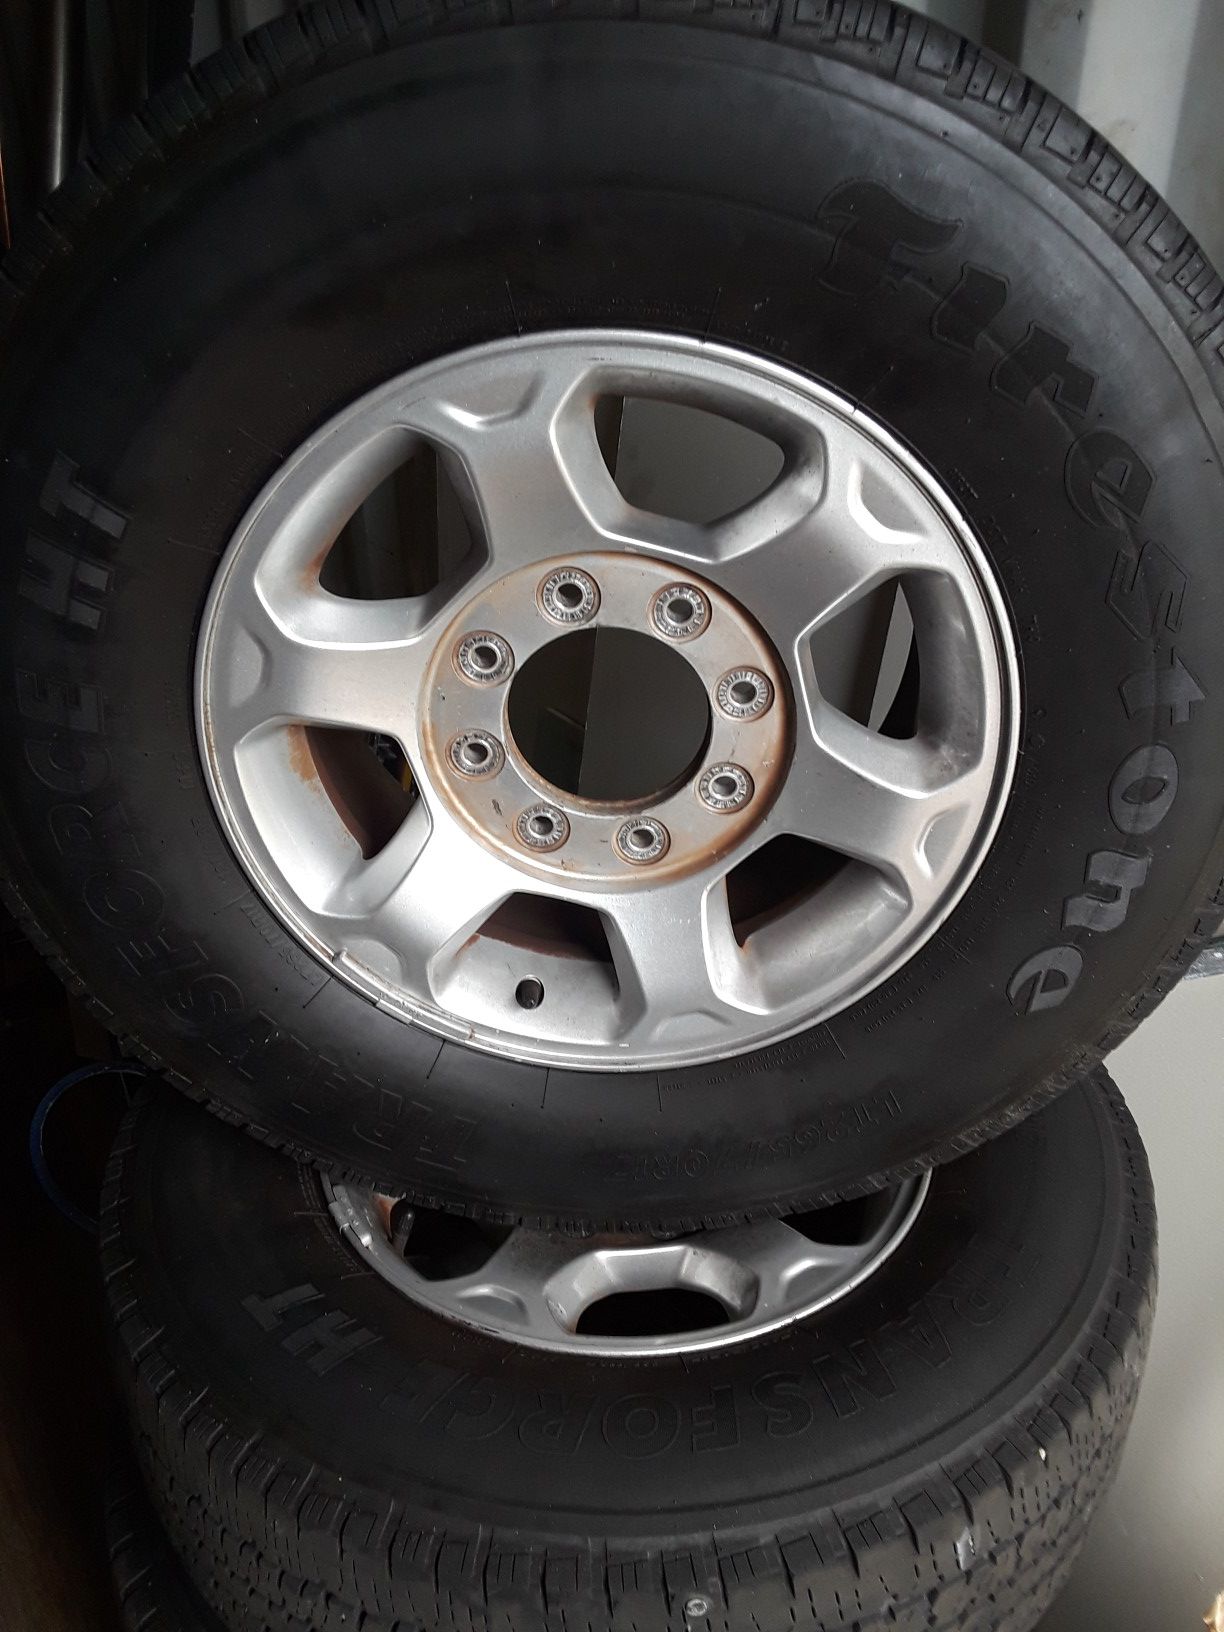 Ford F250 wheels with 265x70x17 Firestone tires